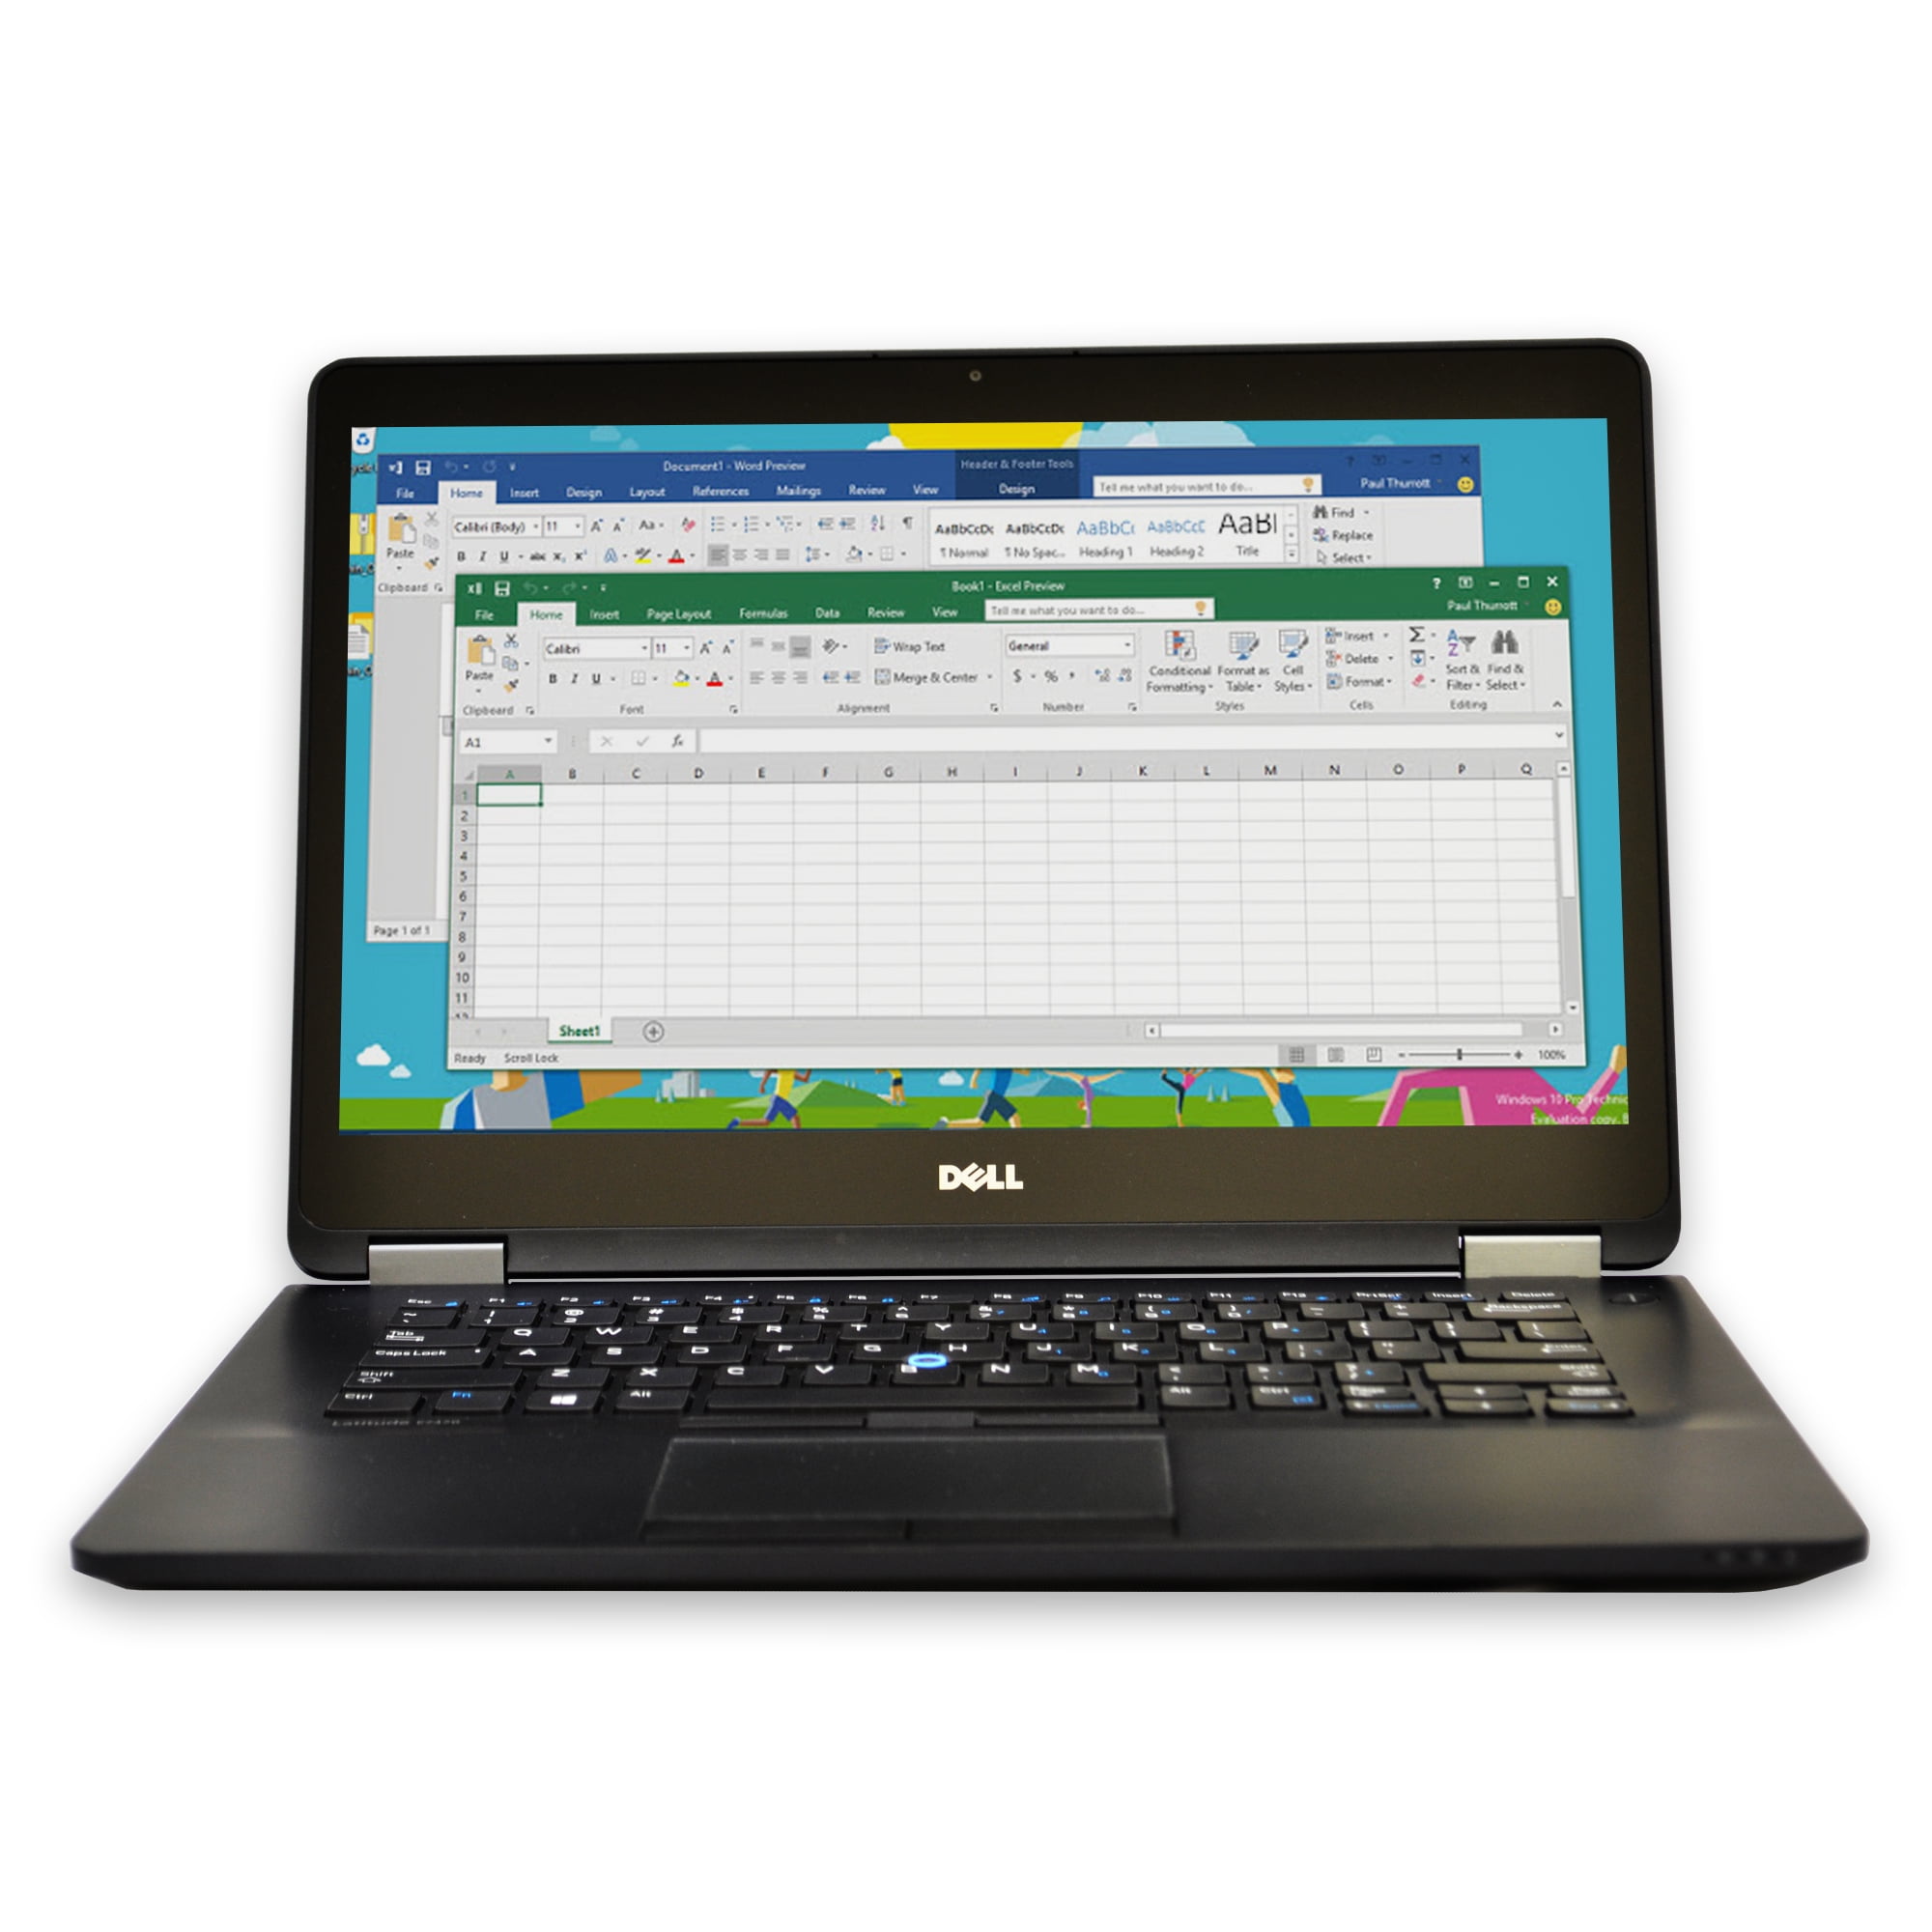 Dell Latitude E7470 Laptop, Intel i5, 16GB RAM, 240GB SSD, Windows 10 Home, Black (Used) - Walmart.com